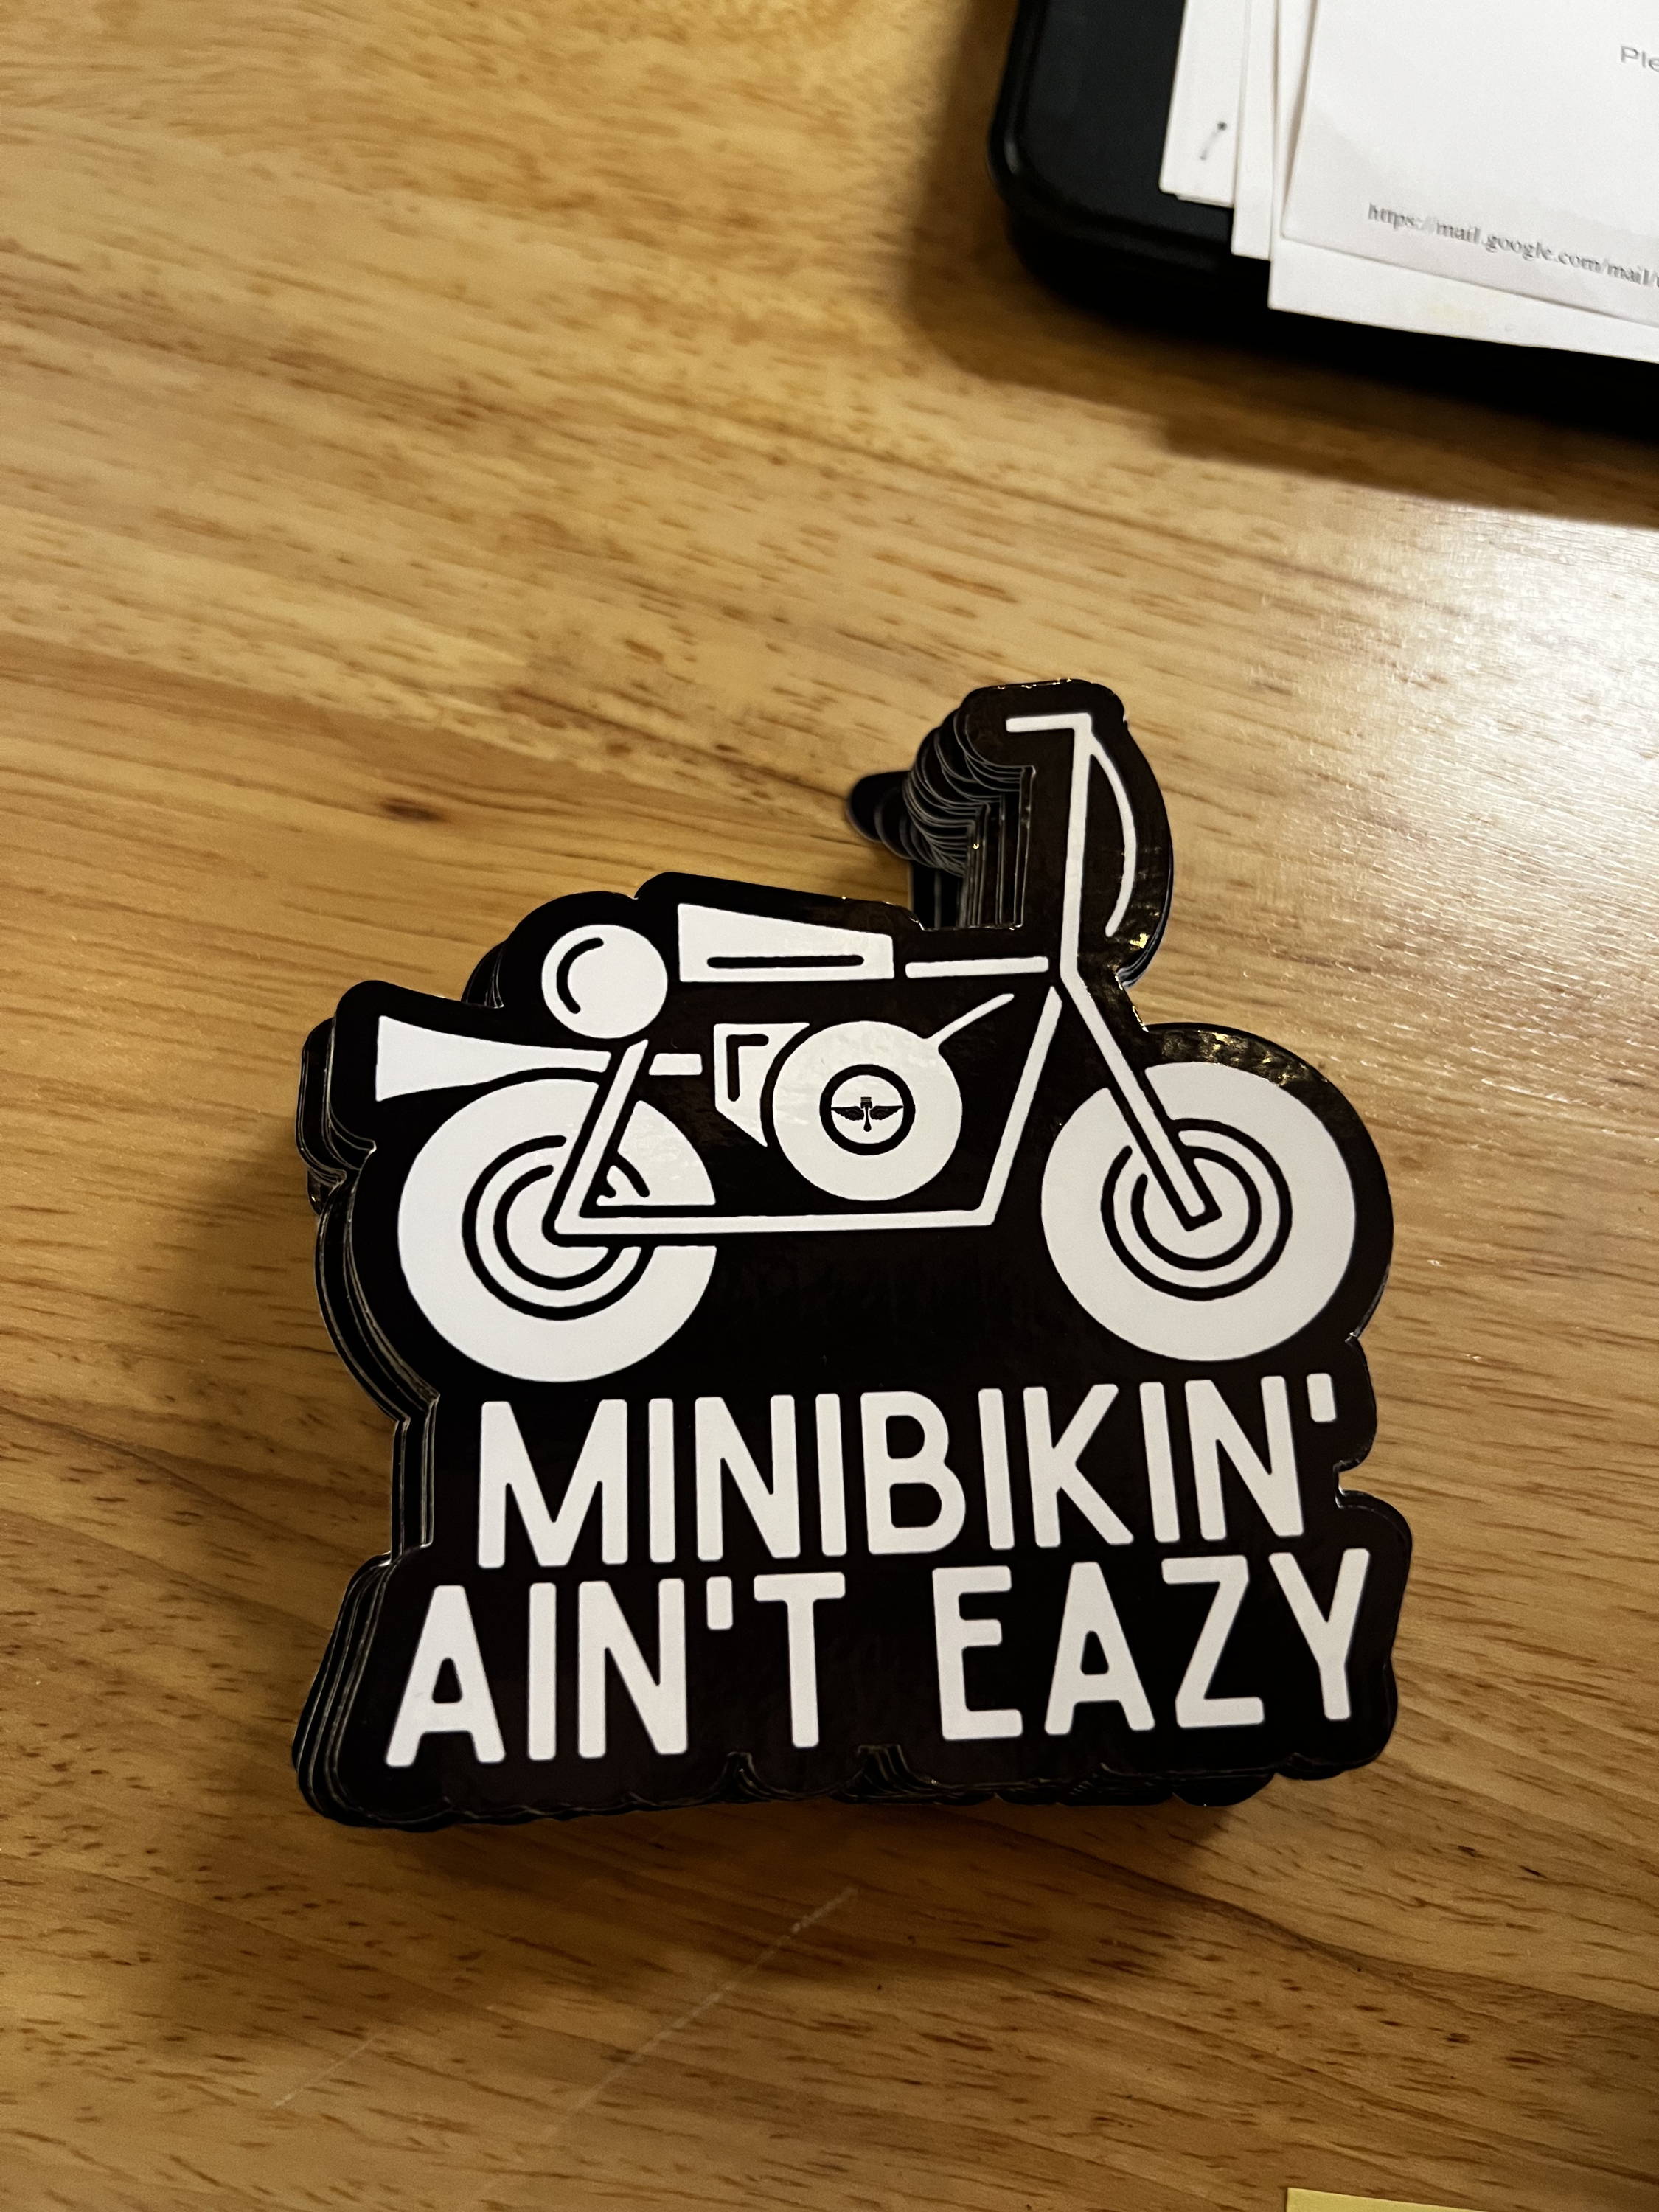 Minibikin' Ain't Eazy yall